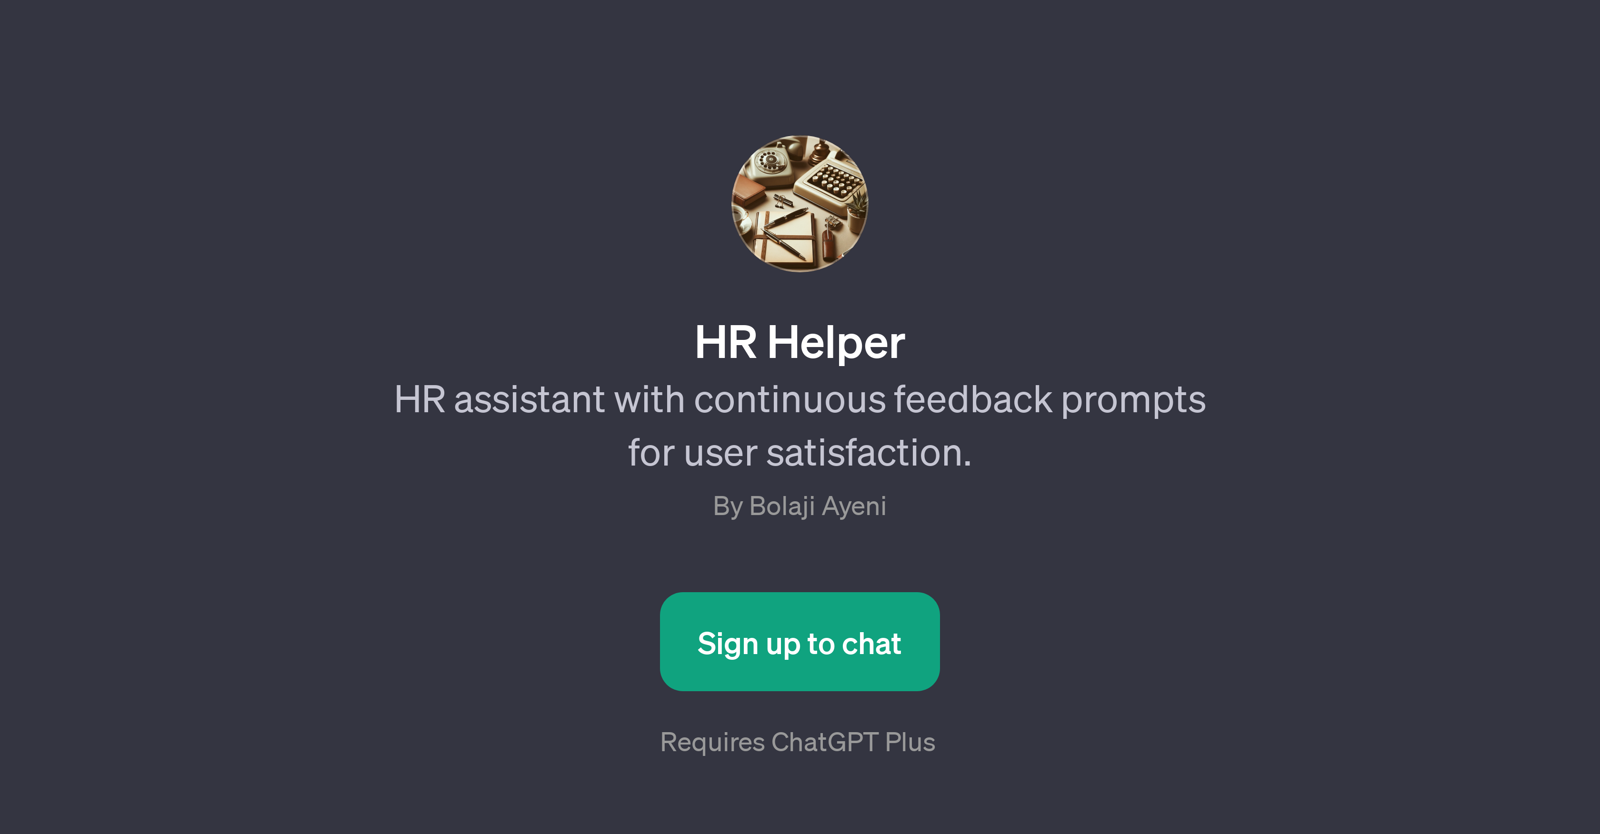 HR Helper website